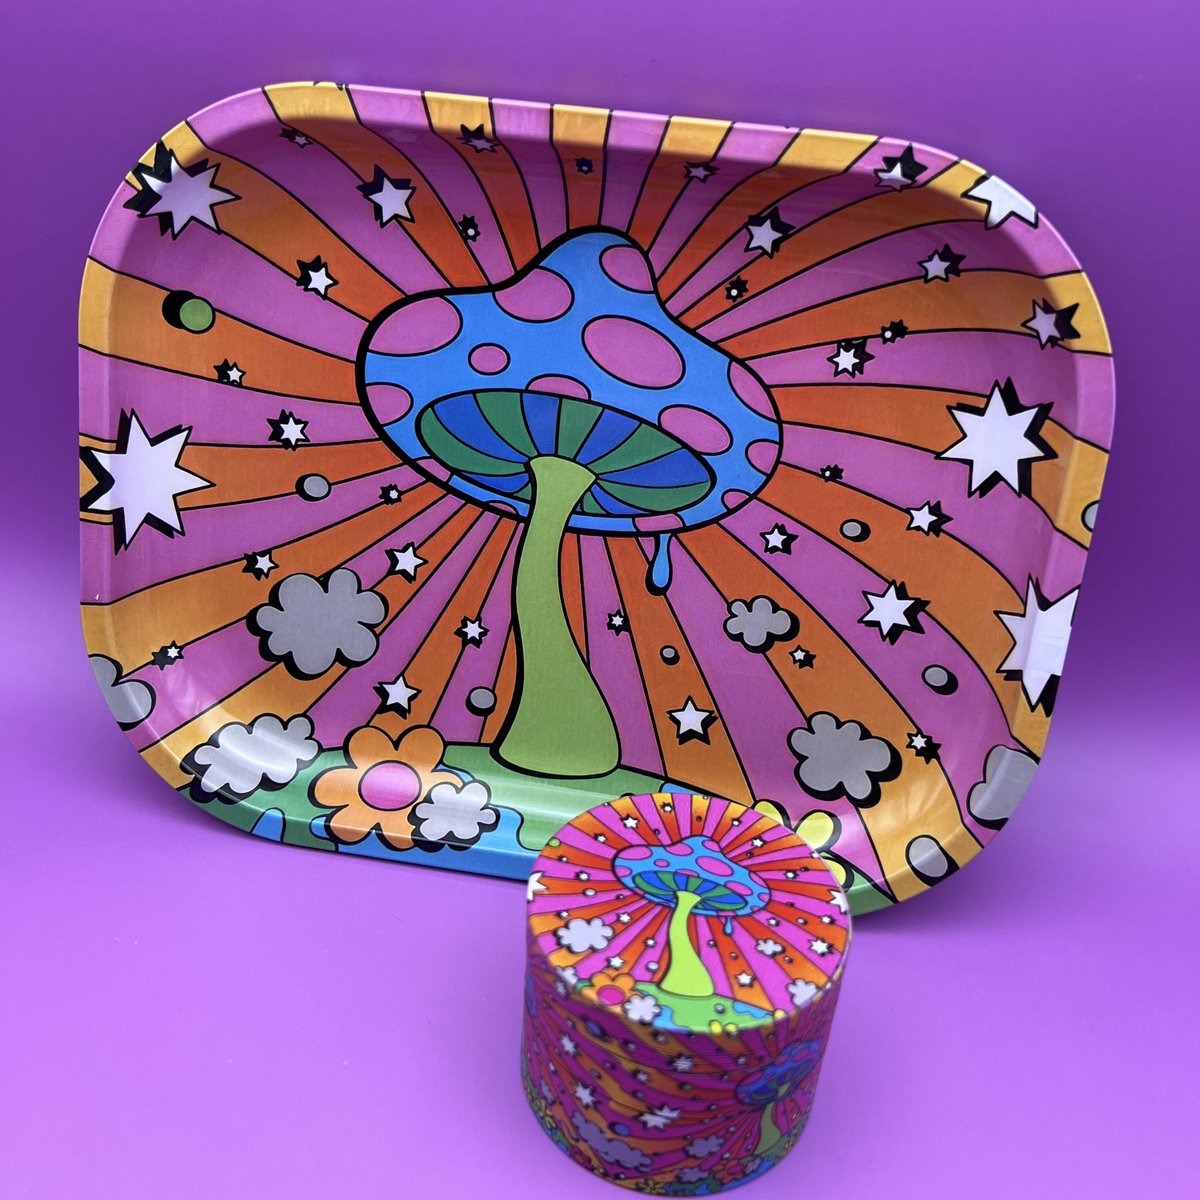 Rolling Tray and Grinder Kit | Mushroom Psychedelic Set Gift Box etsy.me/3BPM5oI #pink #birthday #purple #mothersday #cutetraygrinder #resinrollingtray #beautifulmetaltray #giftsetforher #traygrinderset